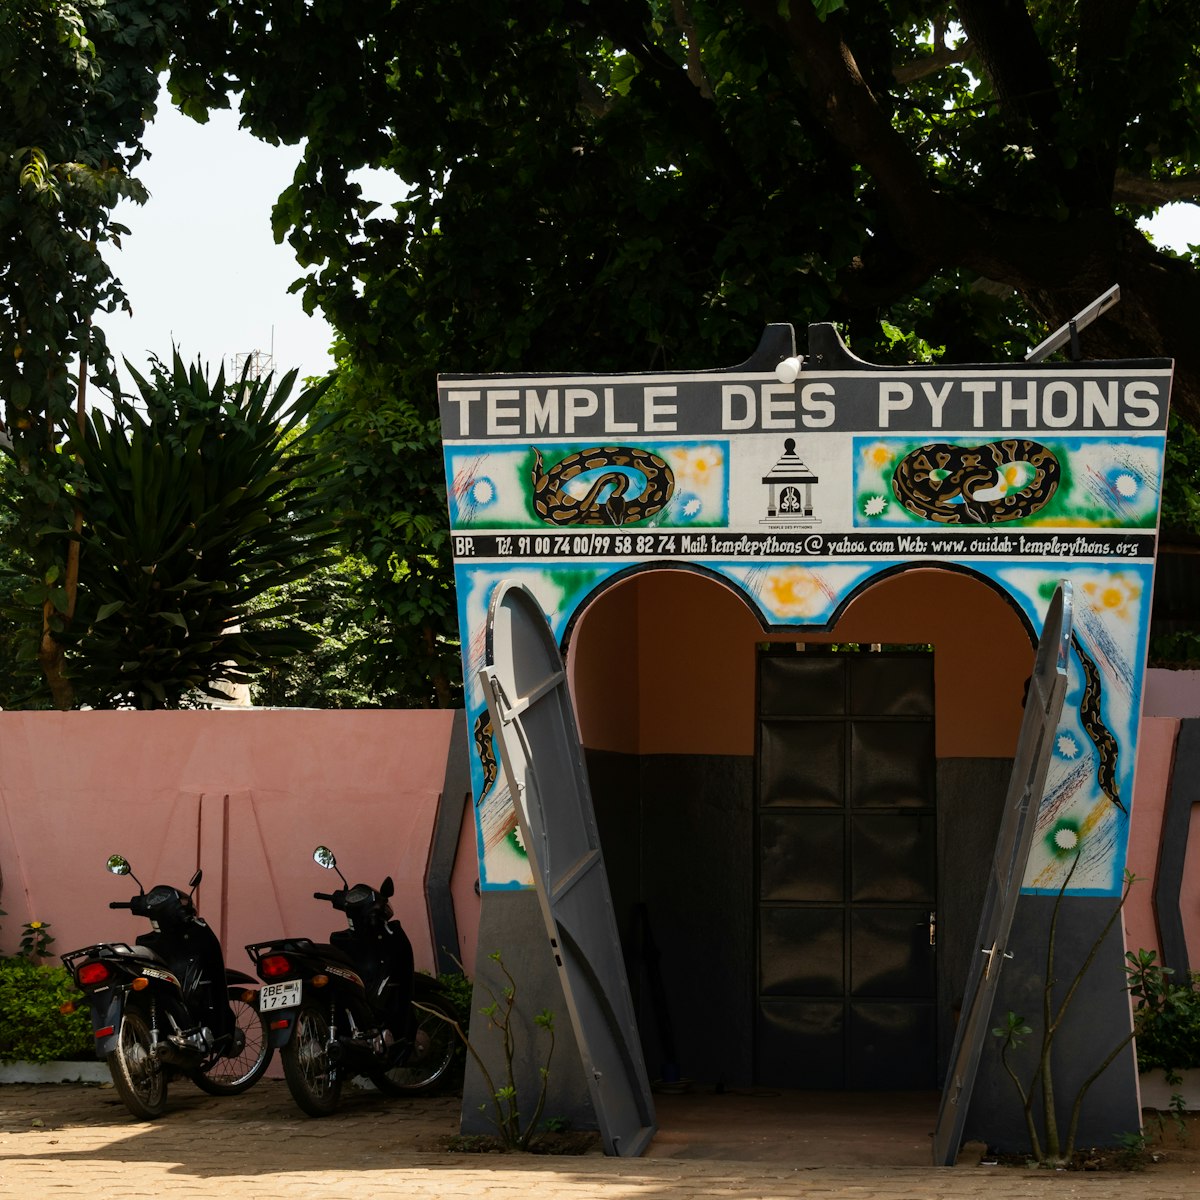 Ouidah, Benin - 30/12/2019. Entrance to the Temple of Pythons.; Shutterstock ID 1644523357; full: 65050; gl: Online editorial; netsuite: POI updates; your: Ann Douglas Lott
1644523357